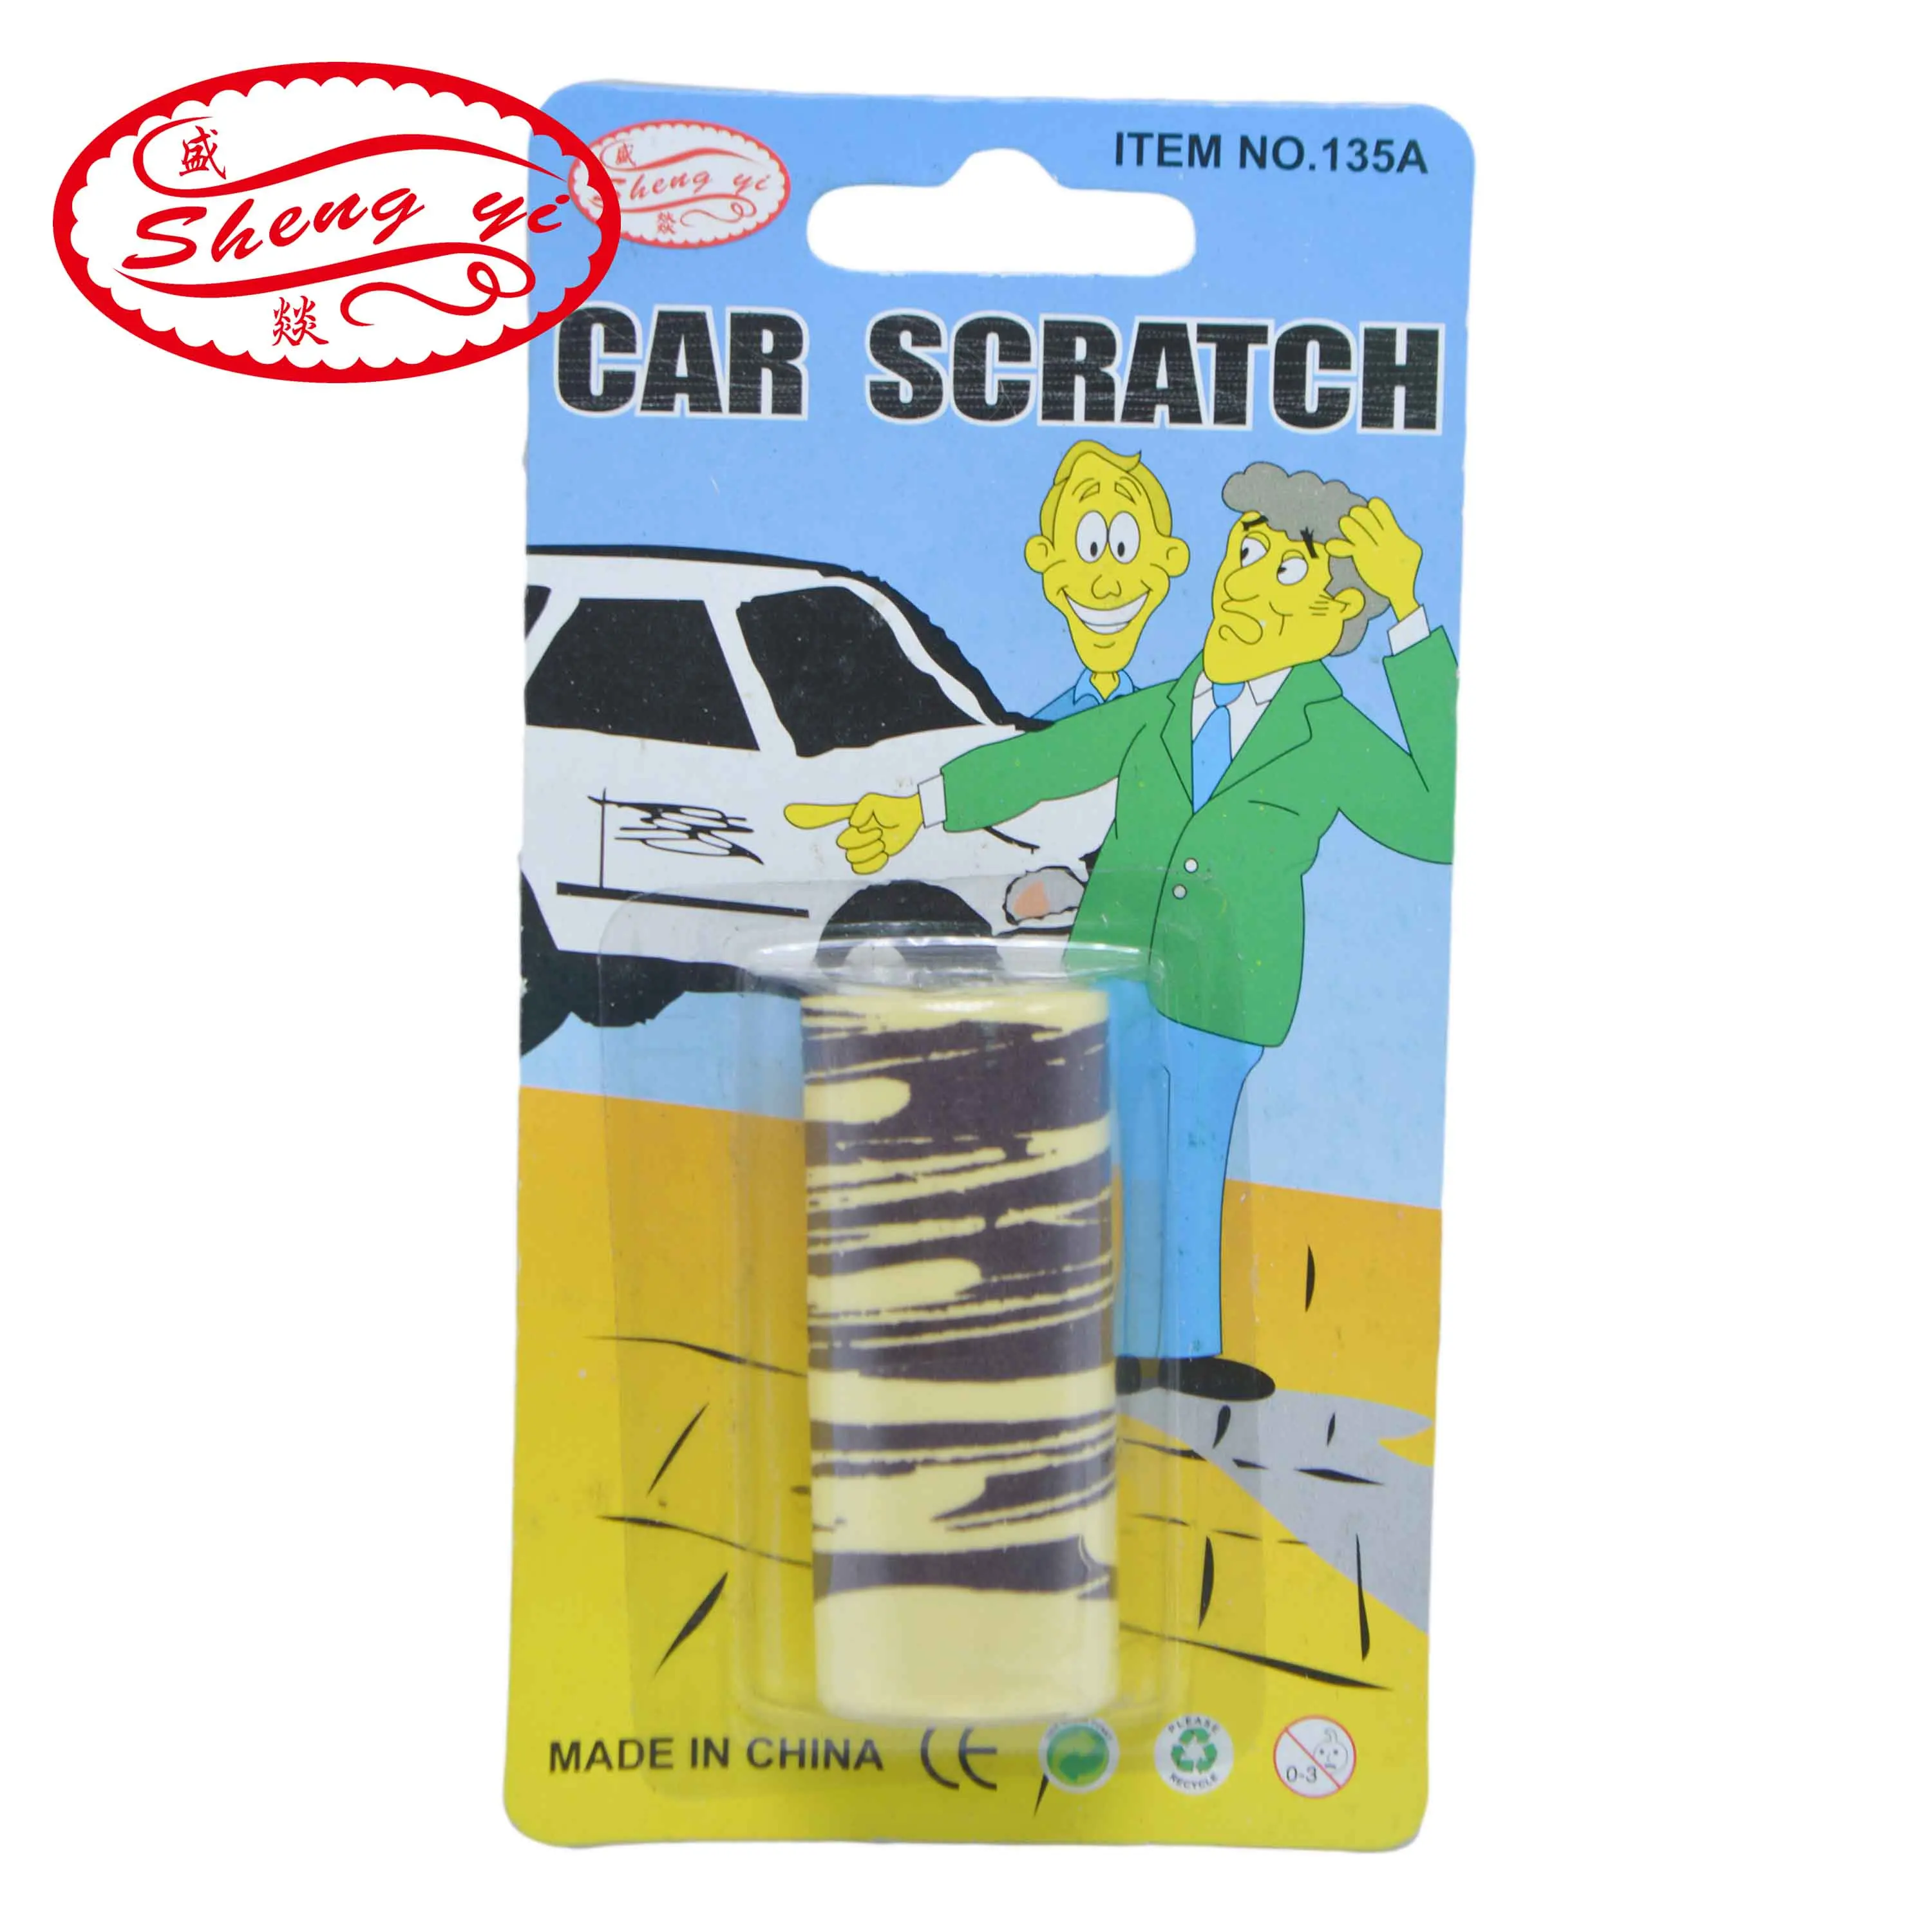 

SHENGYI 1Pcs Car Scratch Stickers Funny Tricky Joking Toys April Fool's Day Gift Prank Props